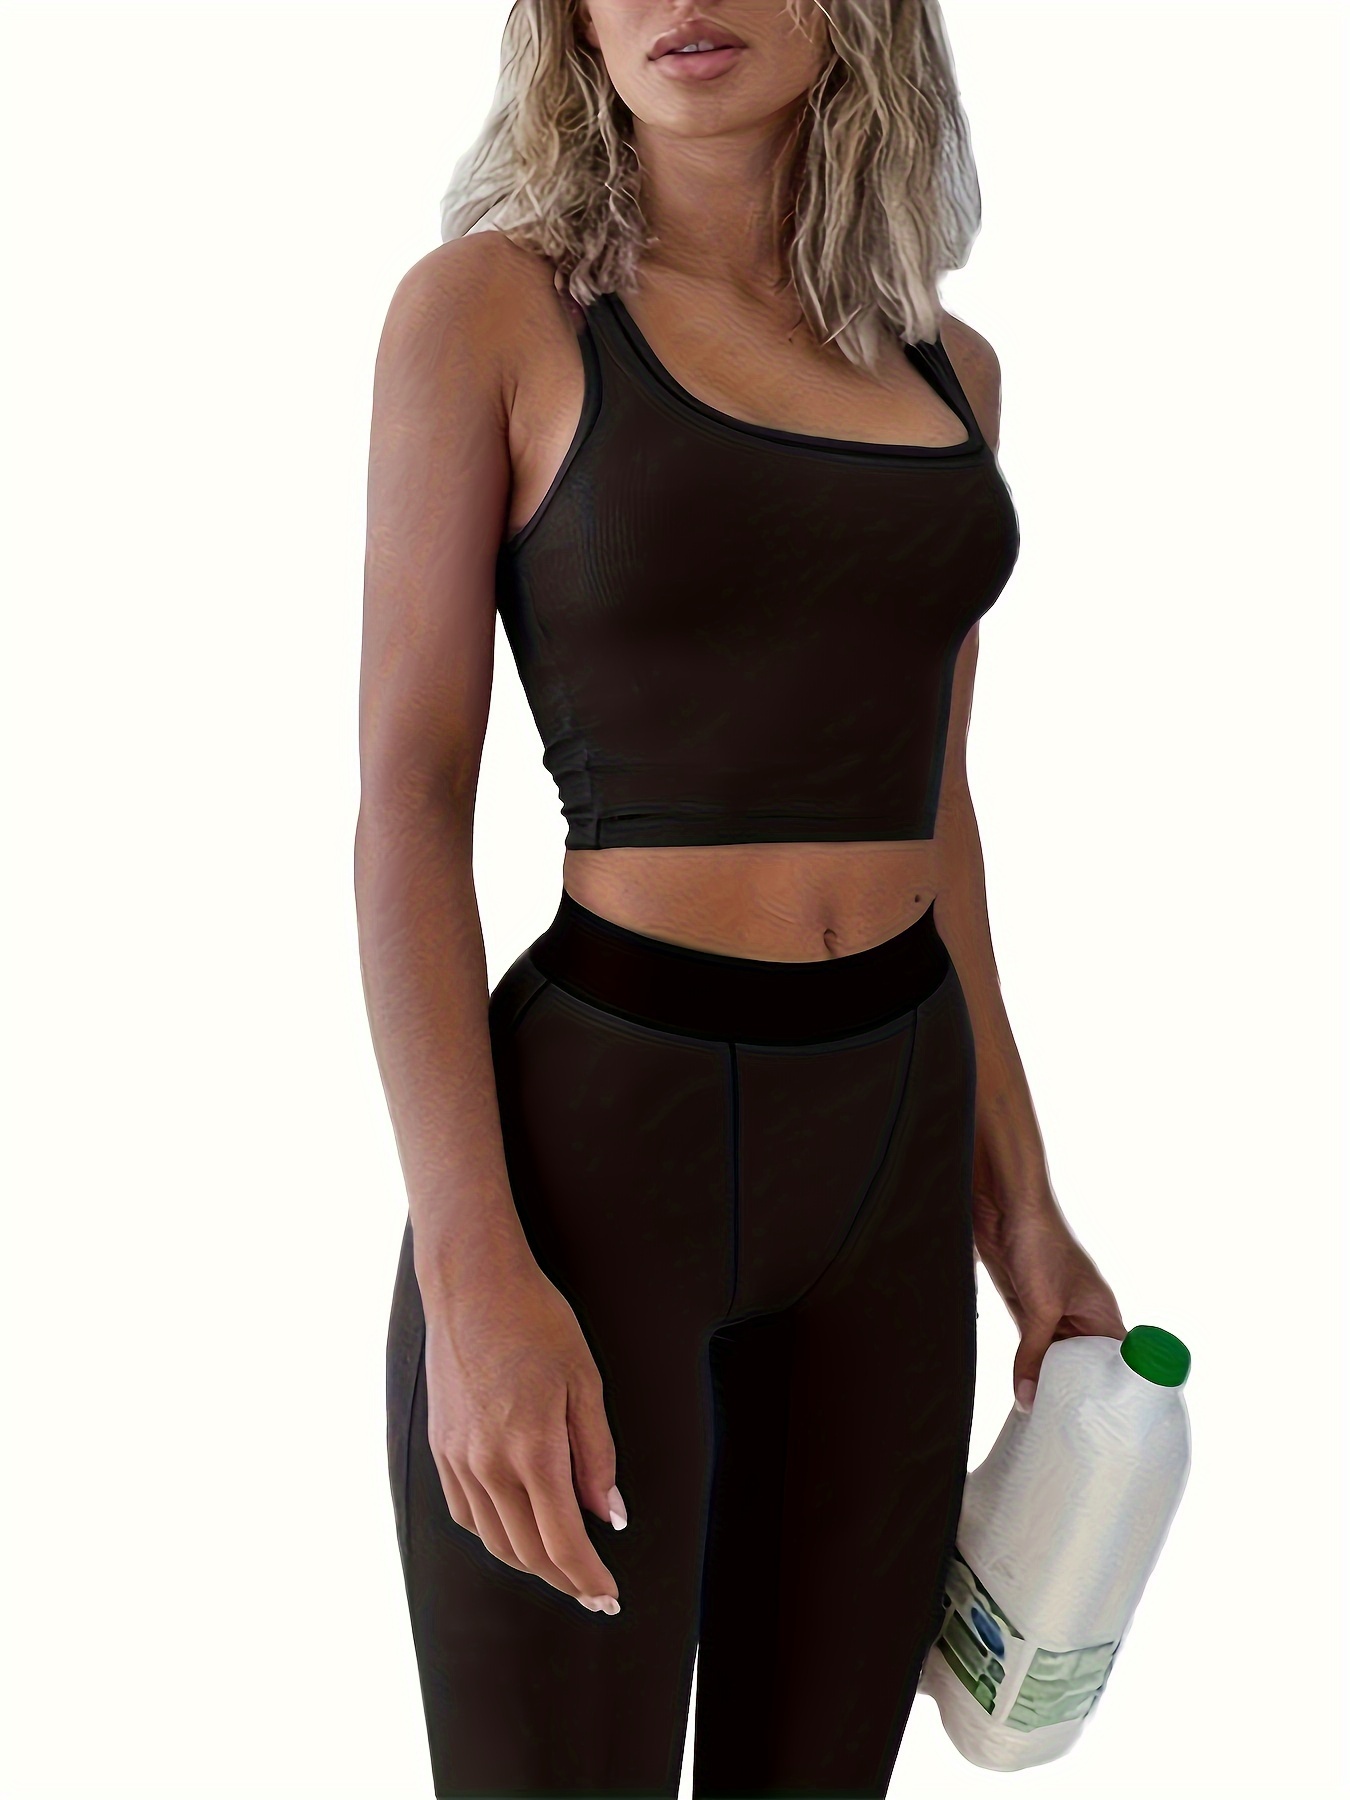 NEW! JOY LAB Workout Set Leggings Tank Top XS Target Running Outfit $17.99  - PicClick